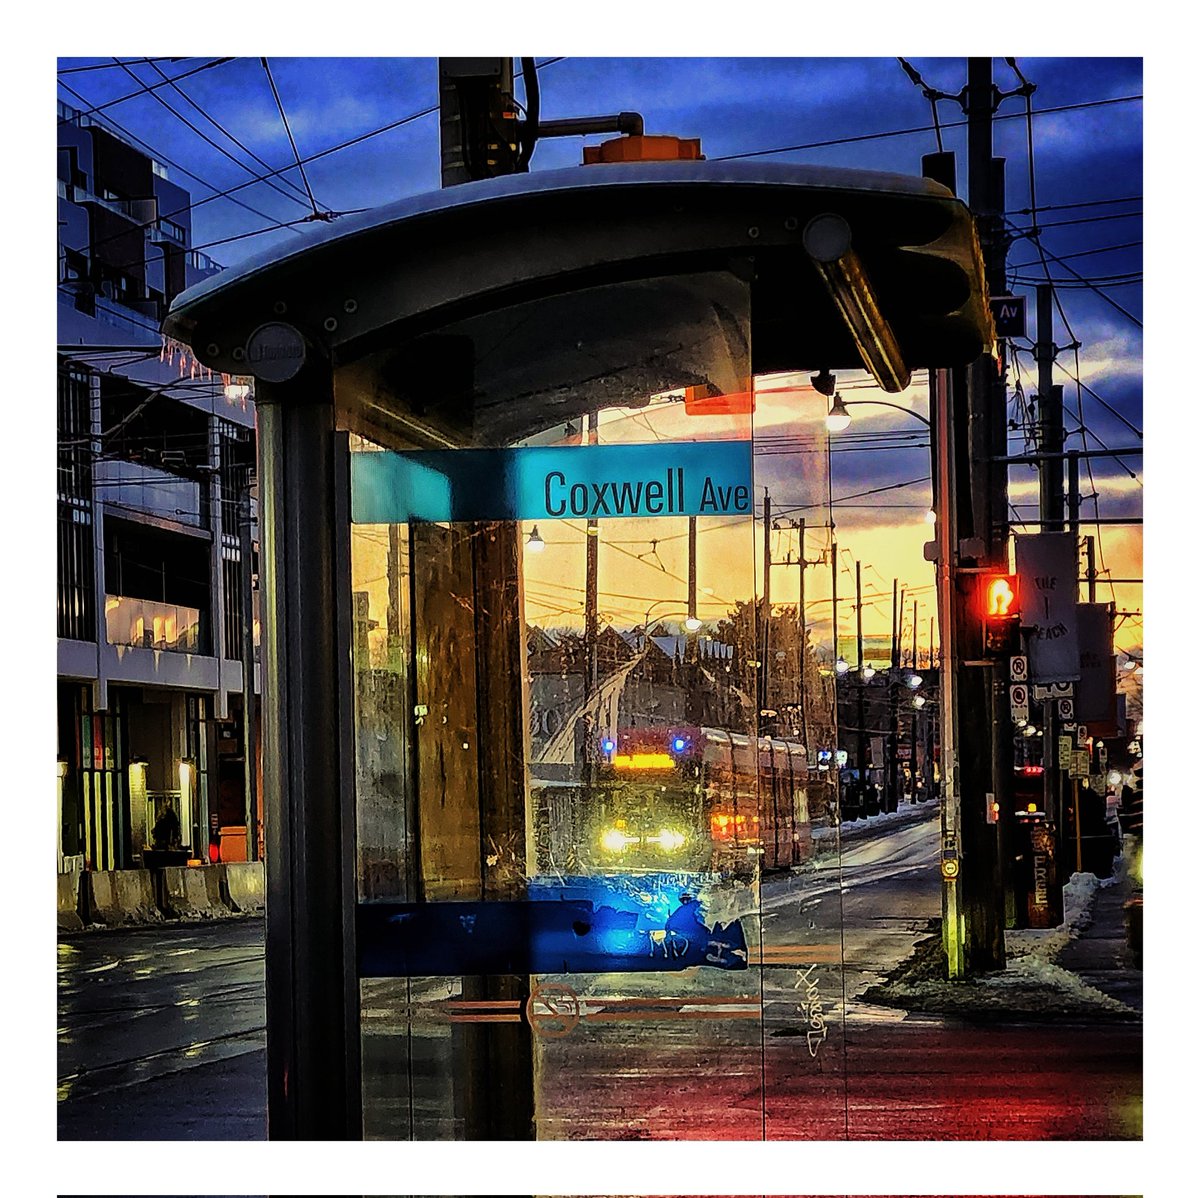 Coxwell Ave. #TTC #Toronto #QueenStreetEast #Coxwell #BusShelter #Leslieville #TransitPhotography #Photography